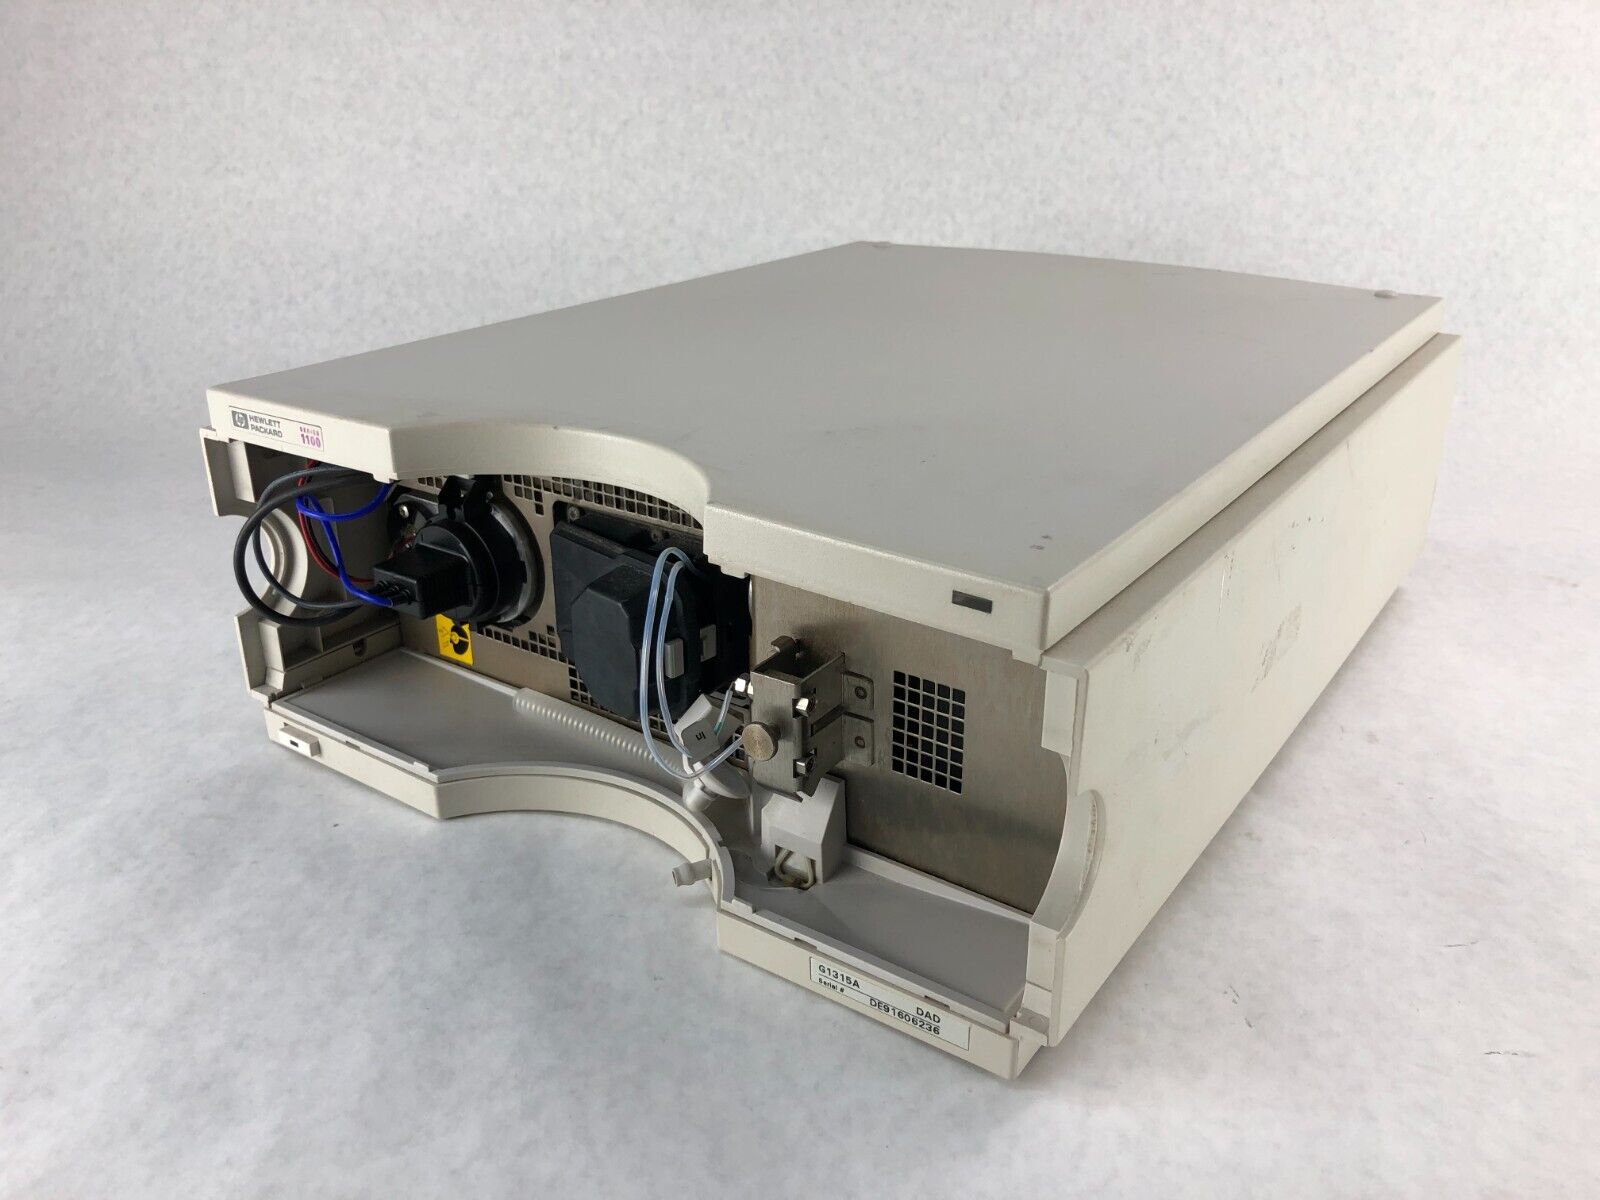 Hewlett Packard Agilent Series 1100 G1315A Diode Array Detector - Bad Main Board